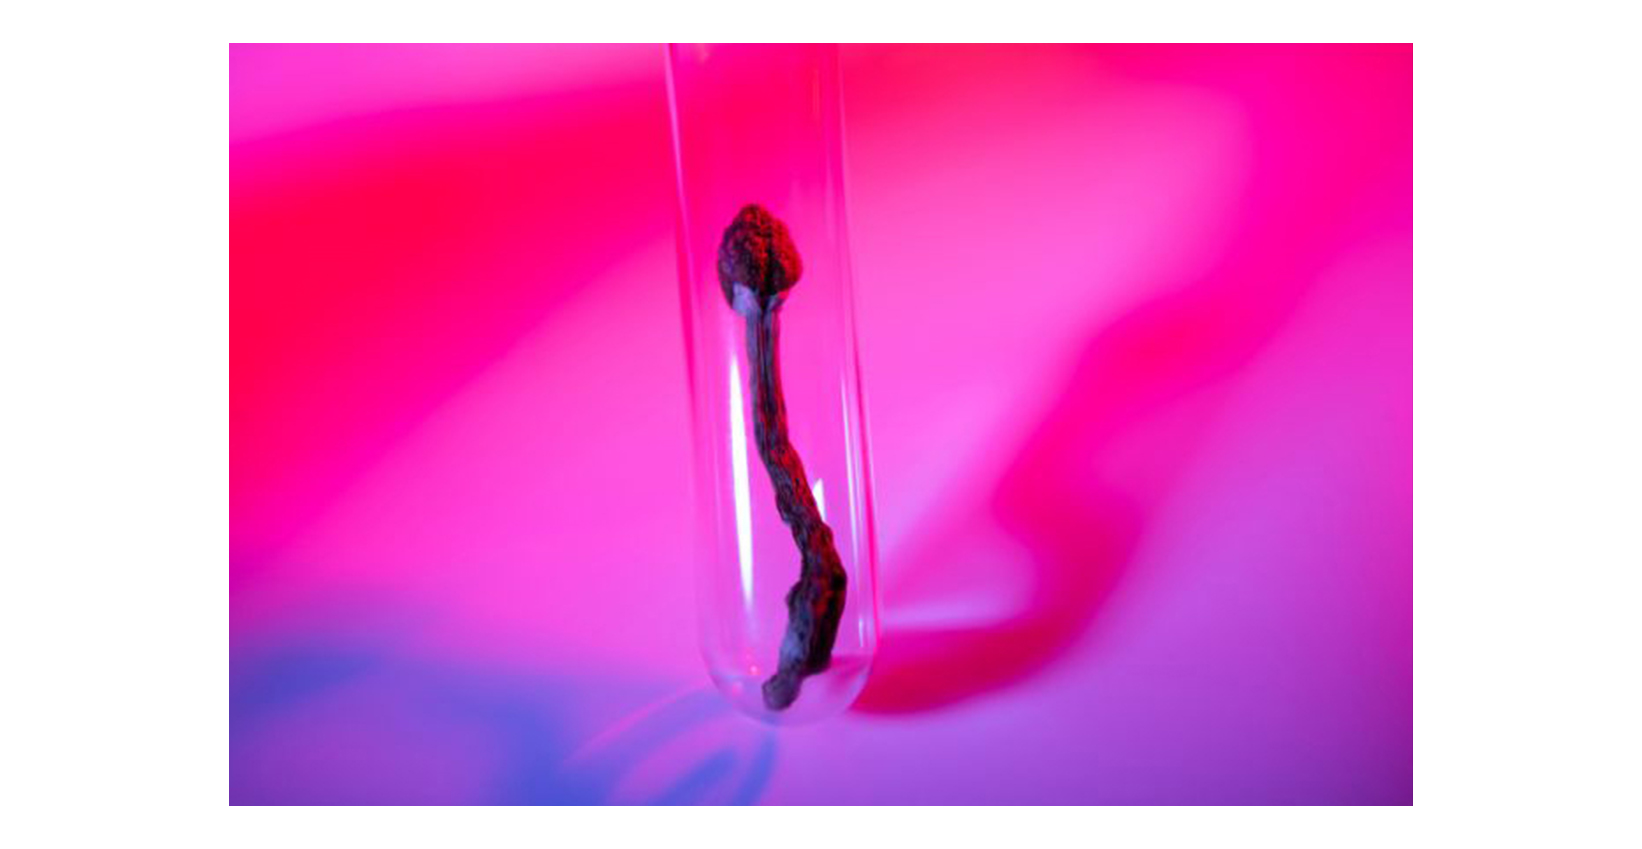 Dried psilocybin mushroom in a glass tube